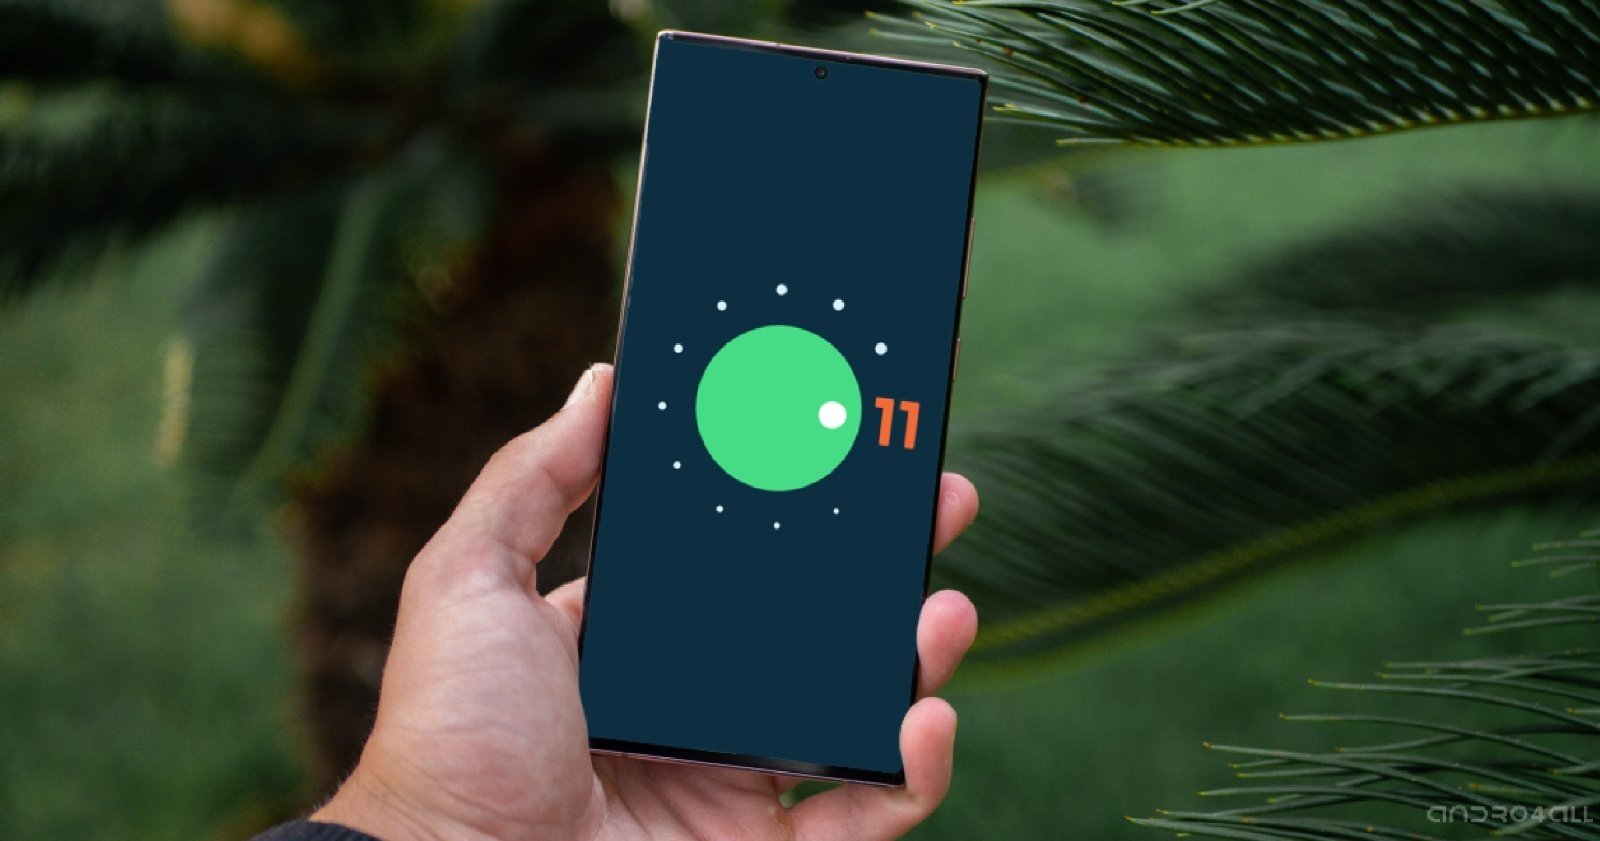 Movil Samsung con Android 11